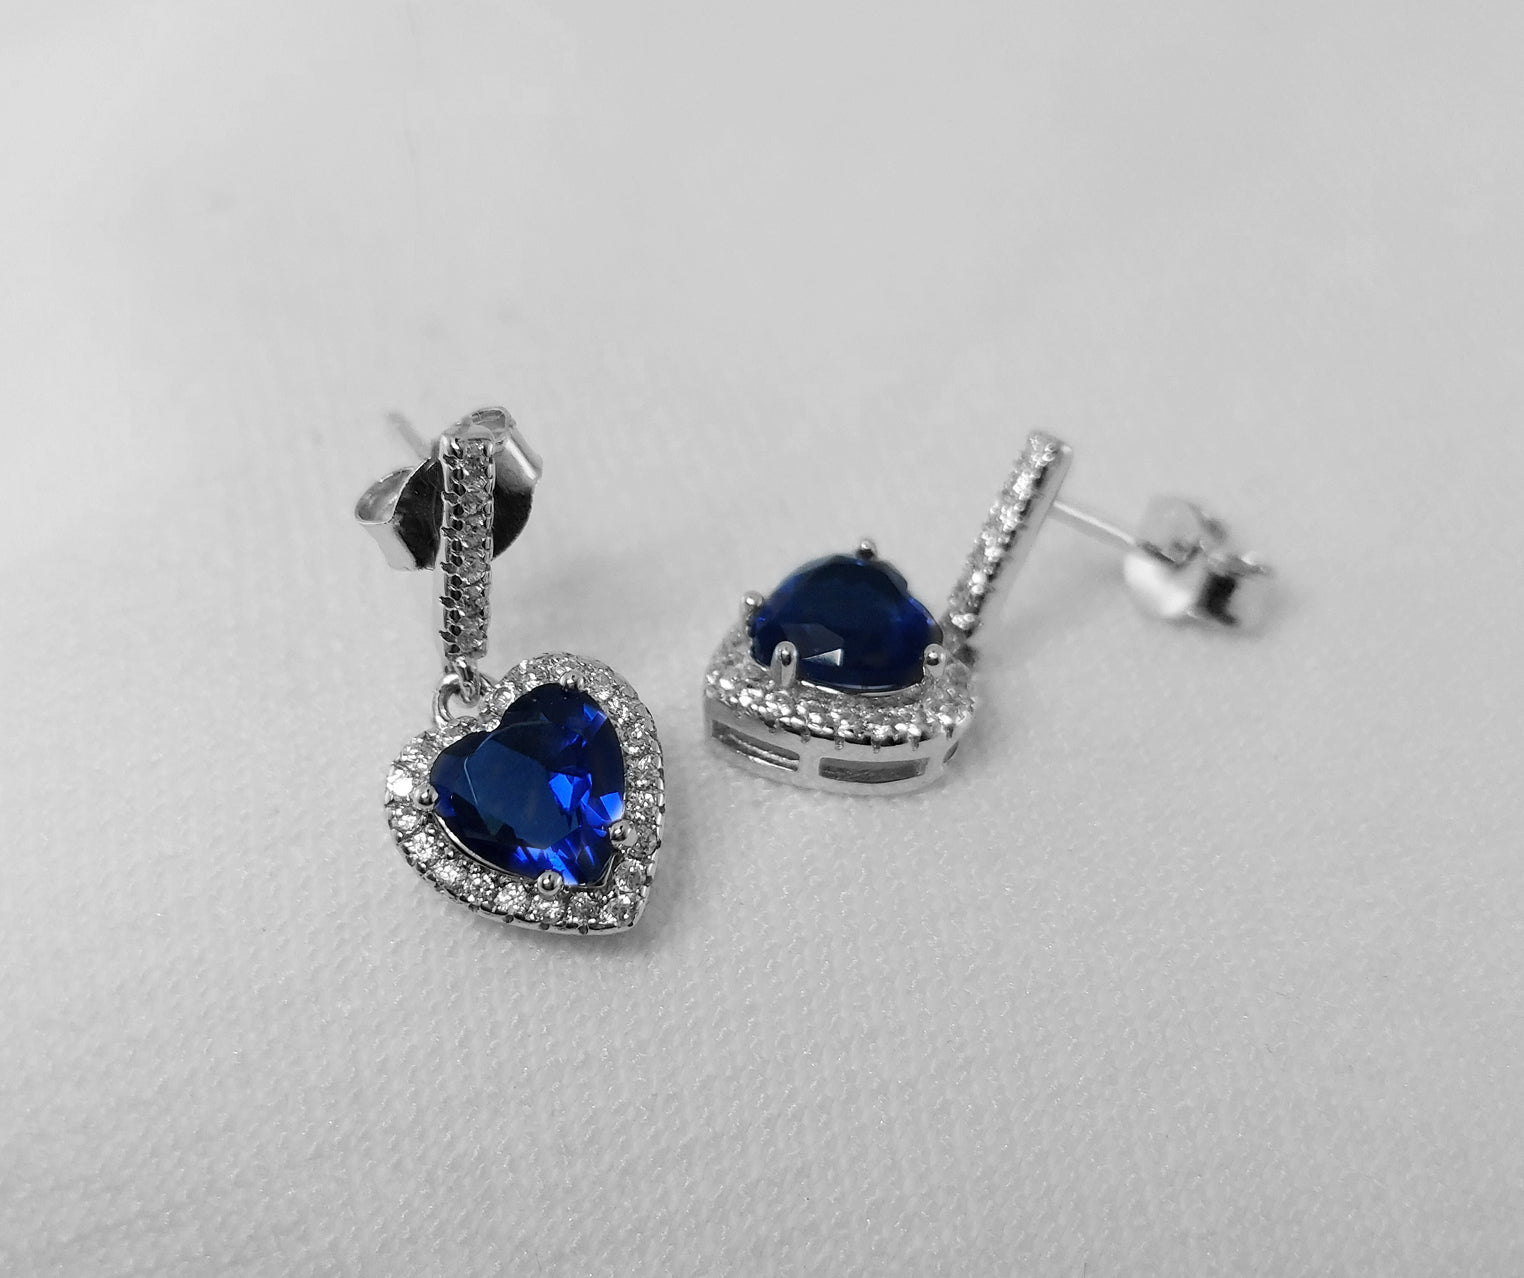 sterling silver heart earrings witha blue cubic zirconia stone